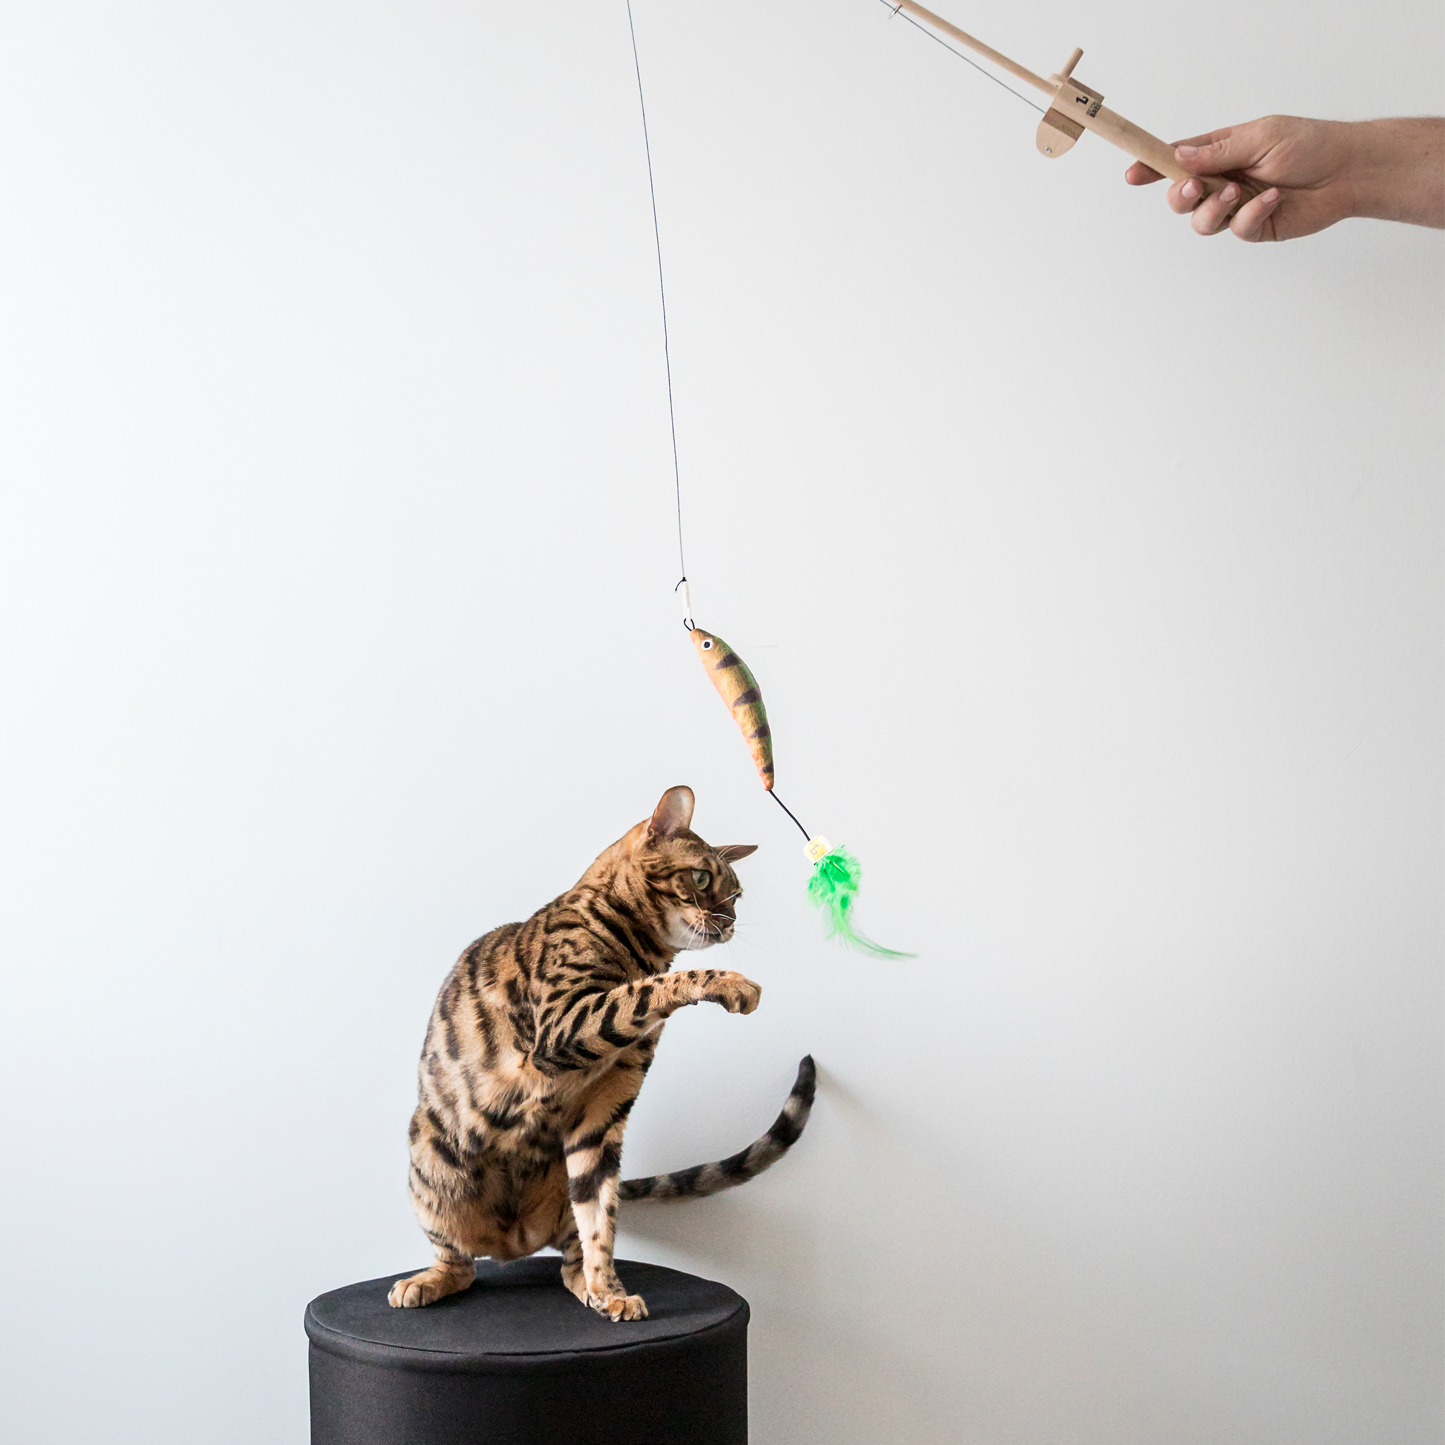 Cat toy - fishing rod